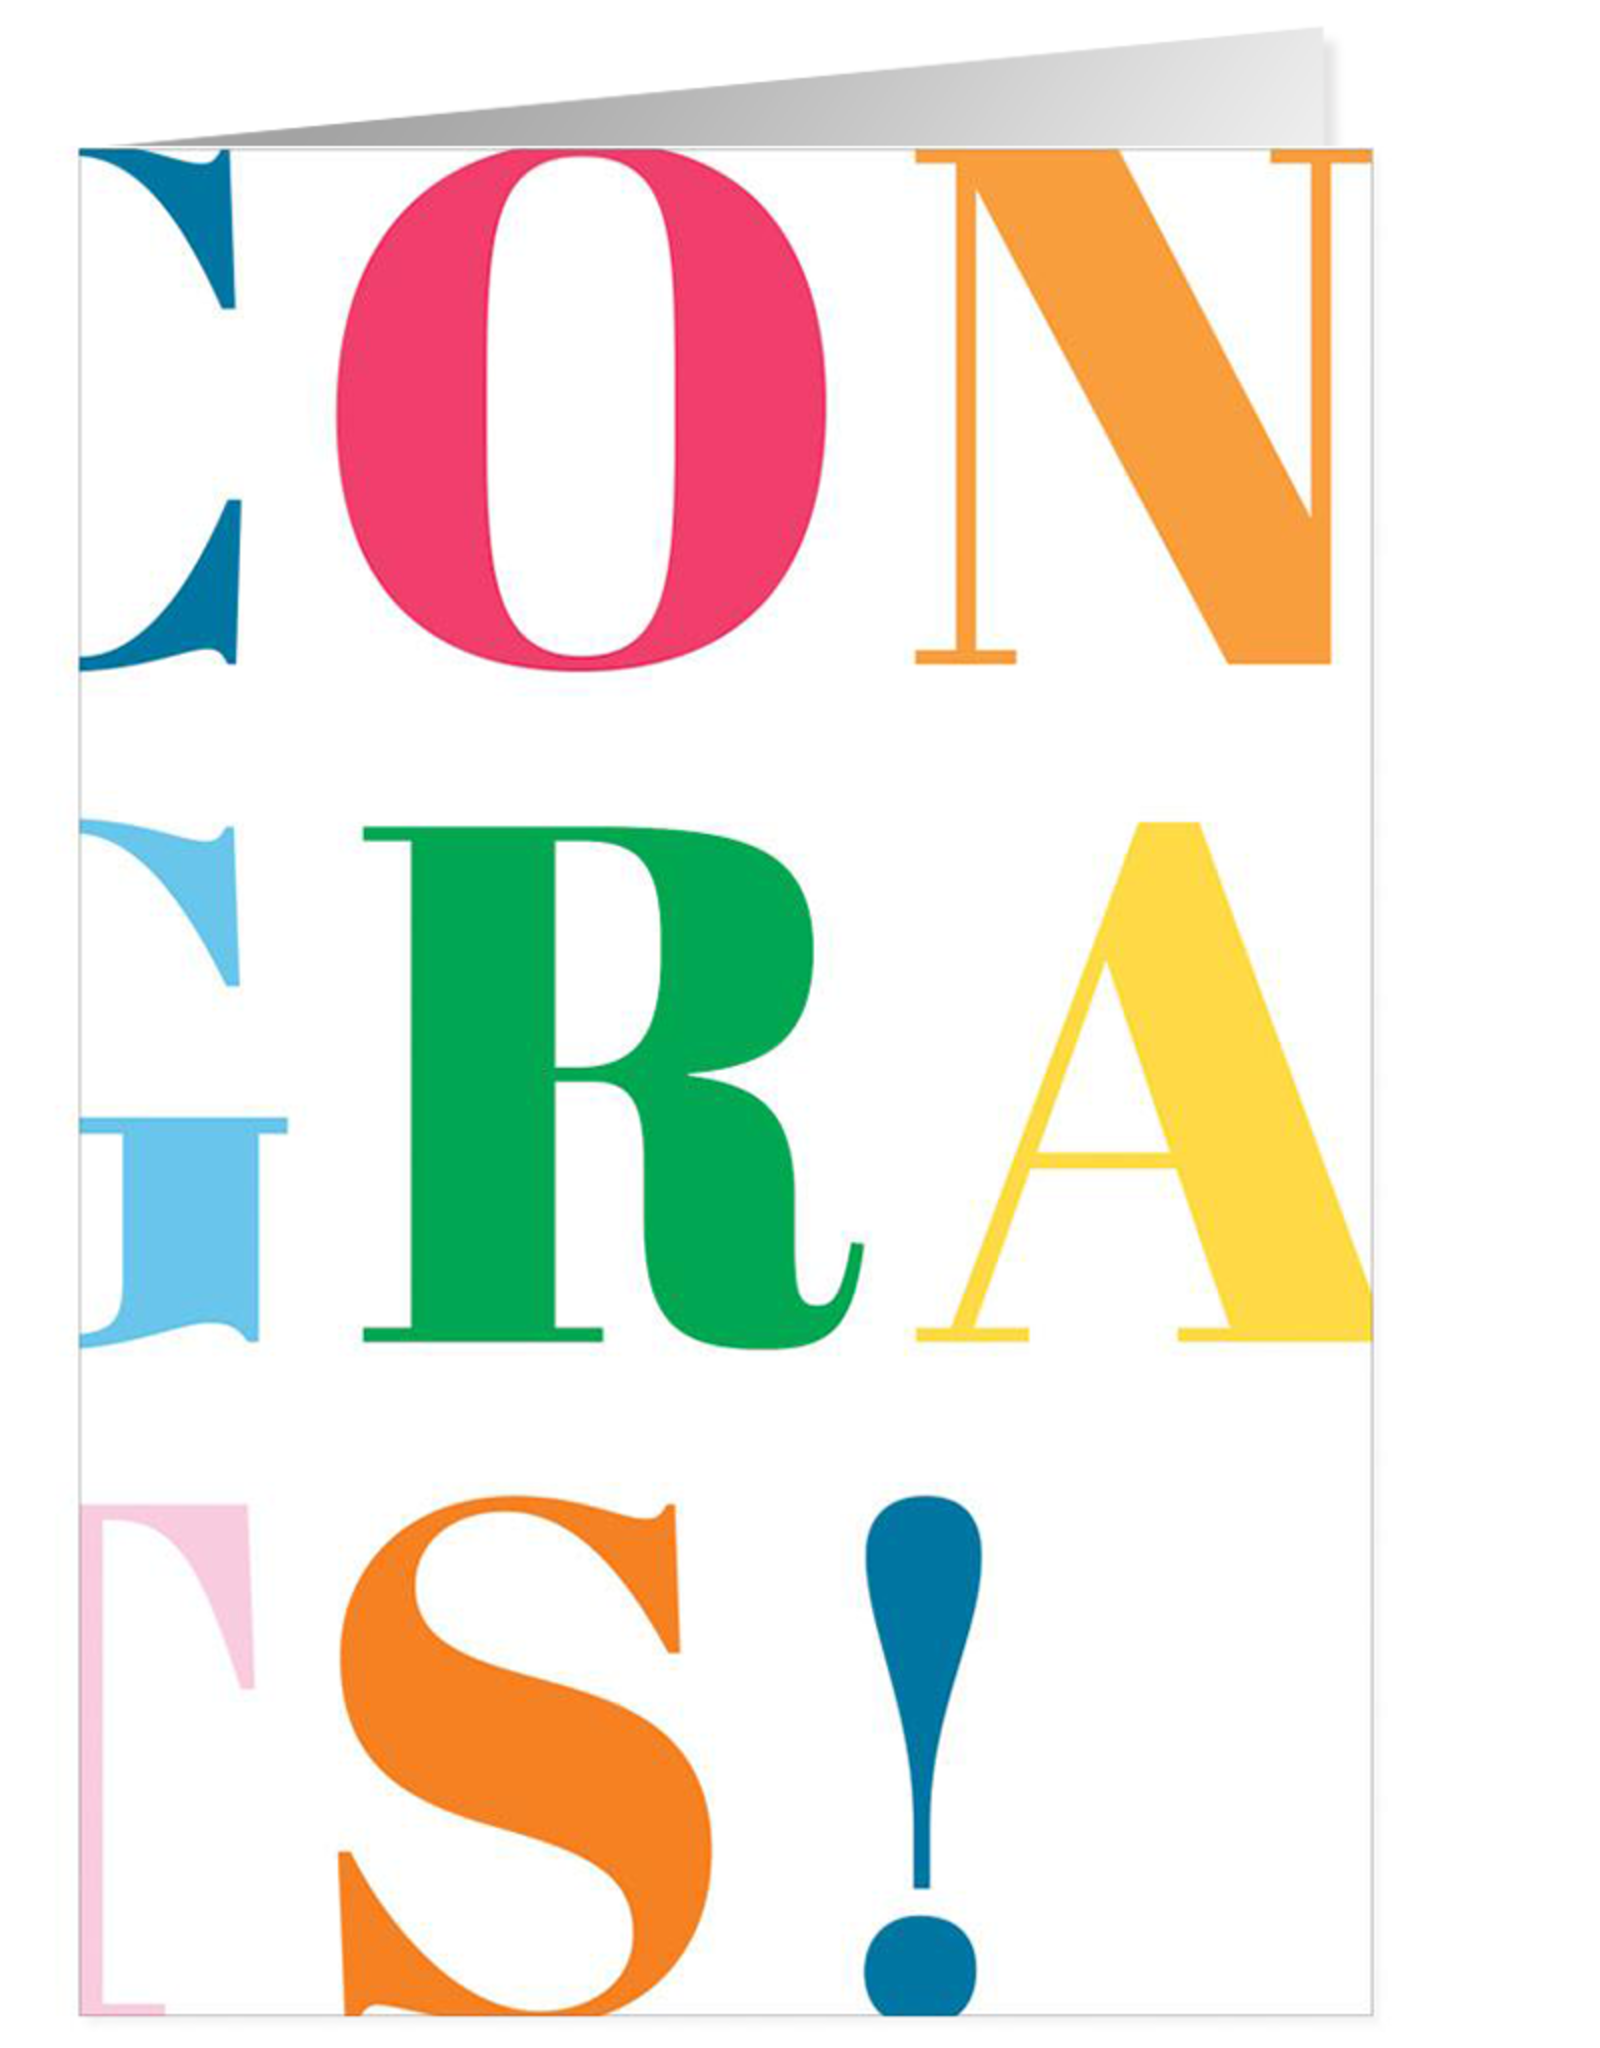 Caspari Congratulations Card CONGRATS Celebrate Your Success